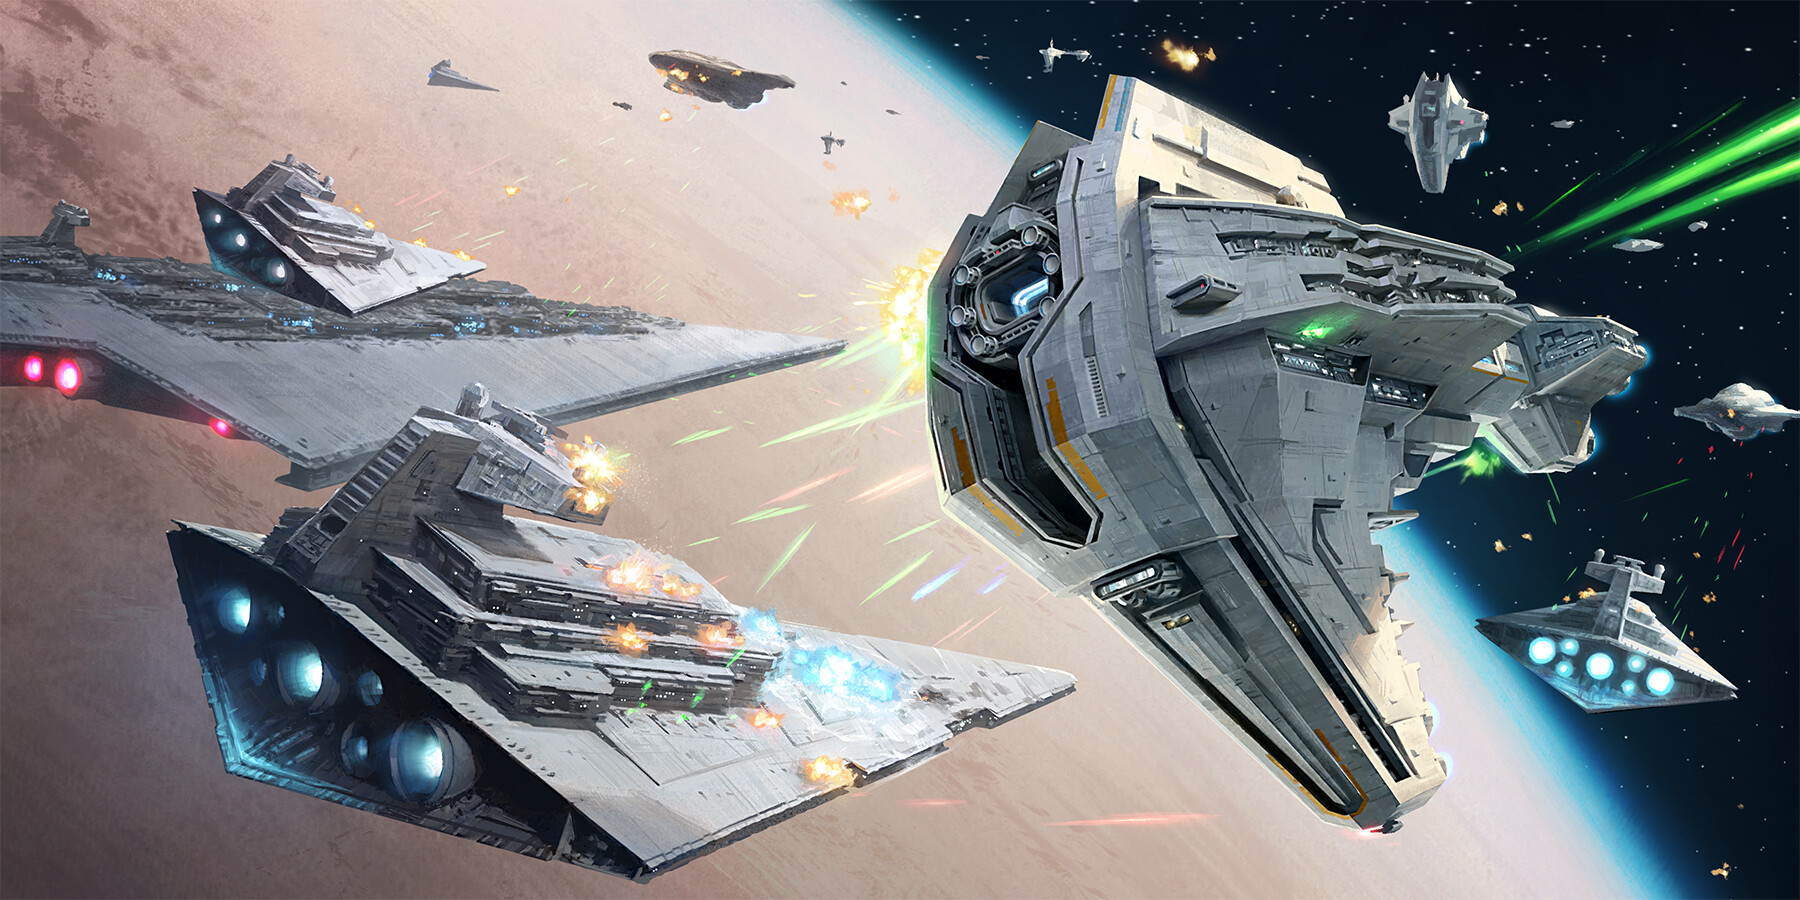 Imperial Forces Science Fiction Star Wars Ships Star Destroyer Star Wars Vehicle Darren Tan Artwork 1800x900